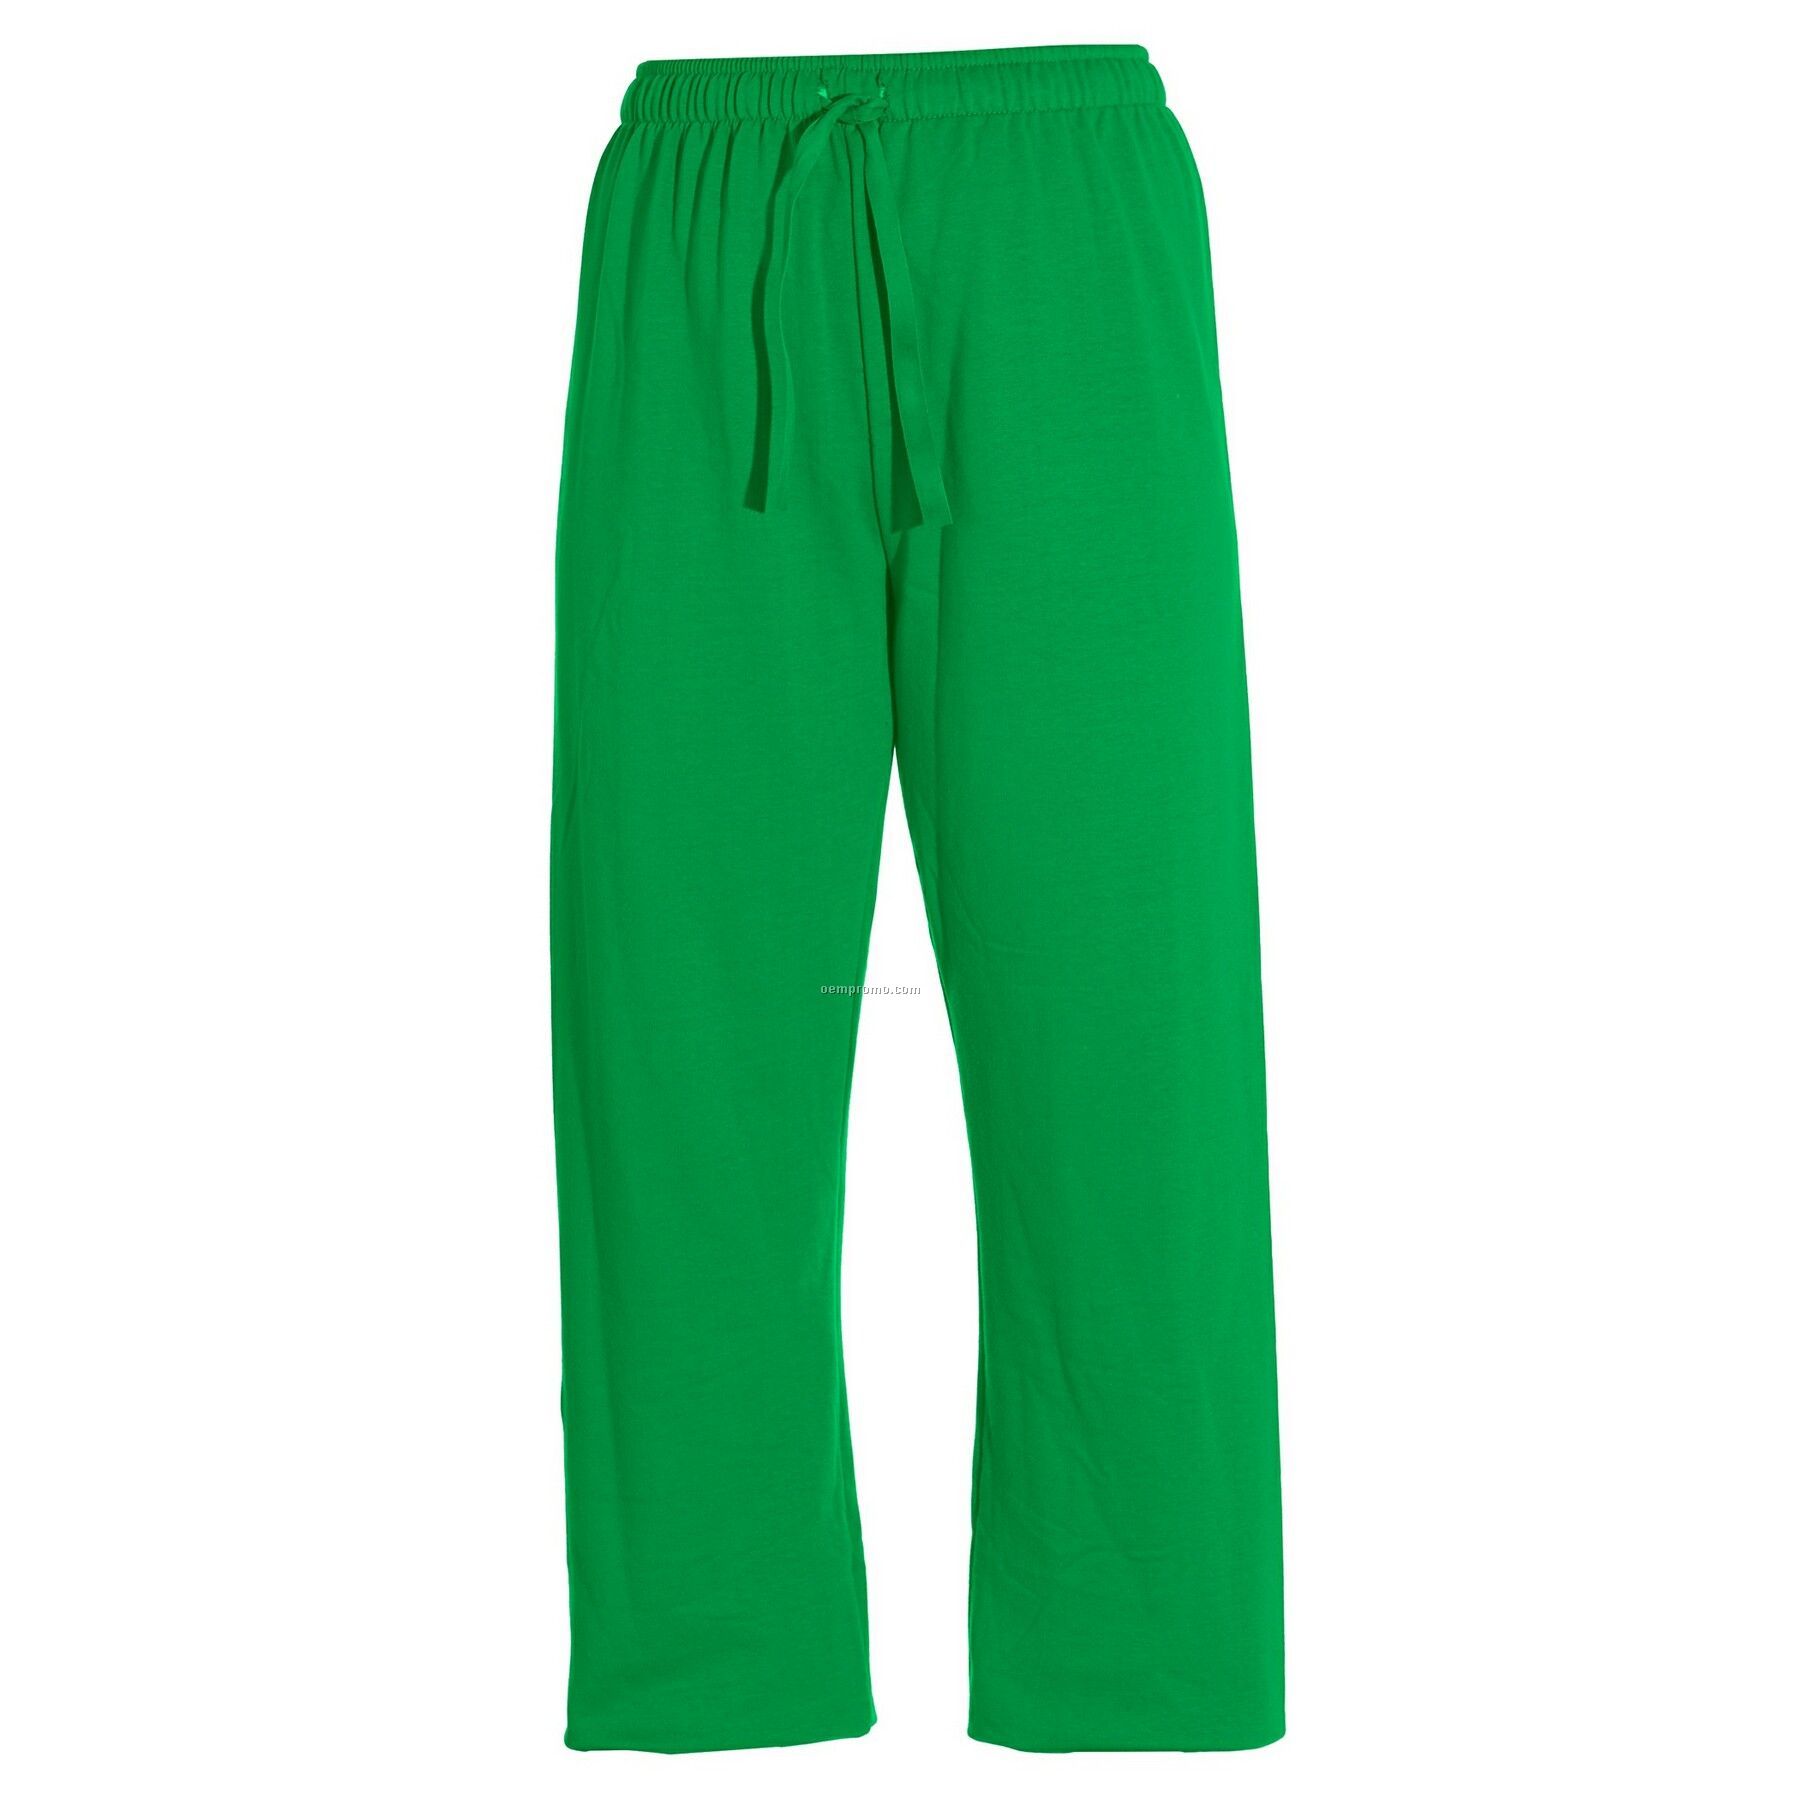 pants clipart green pants